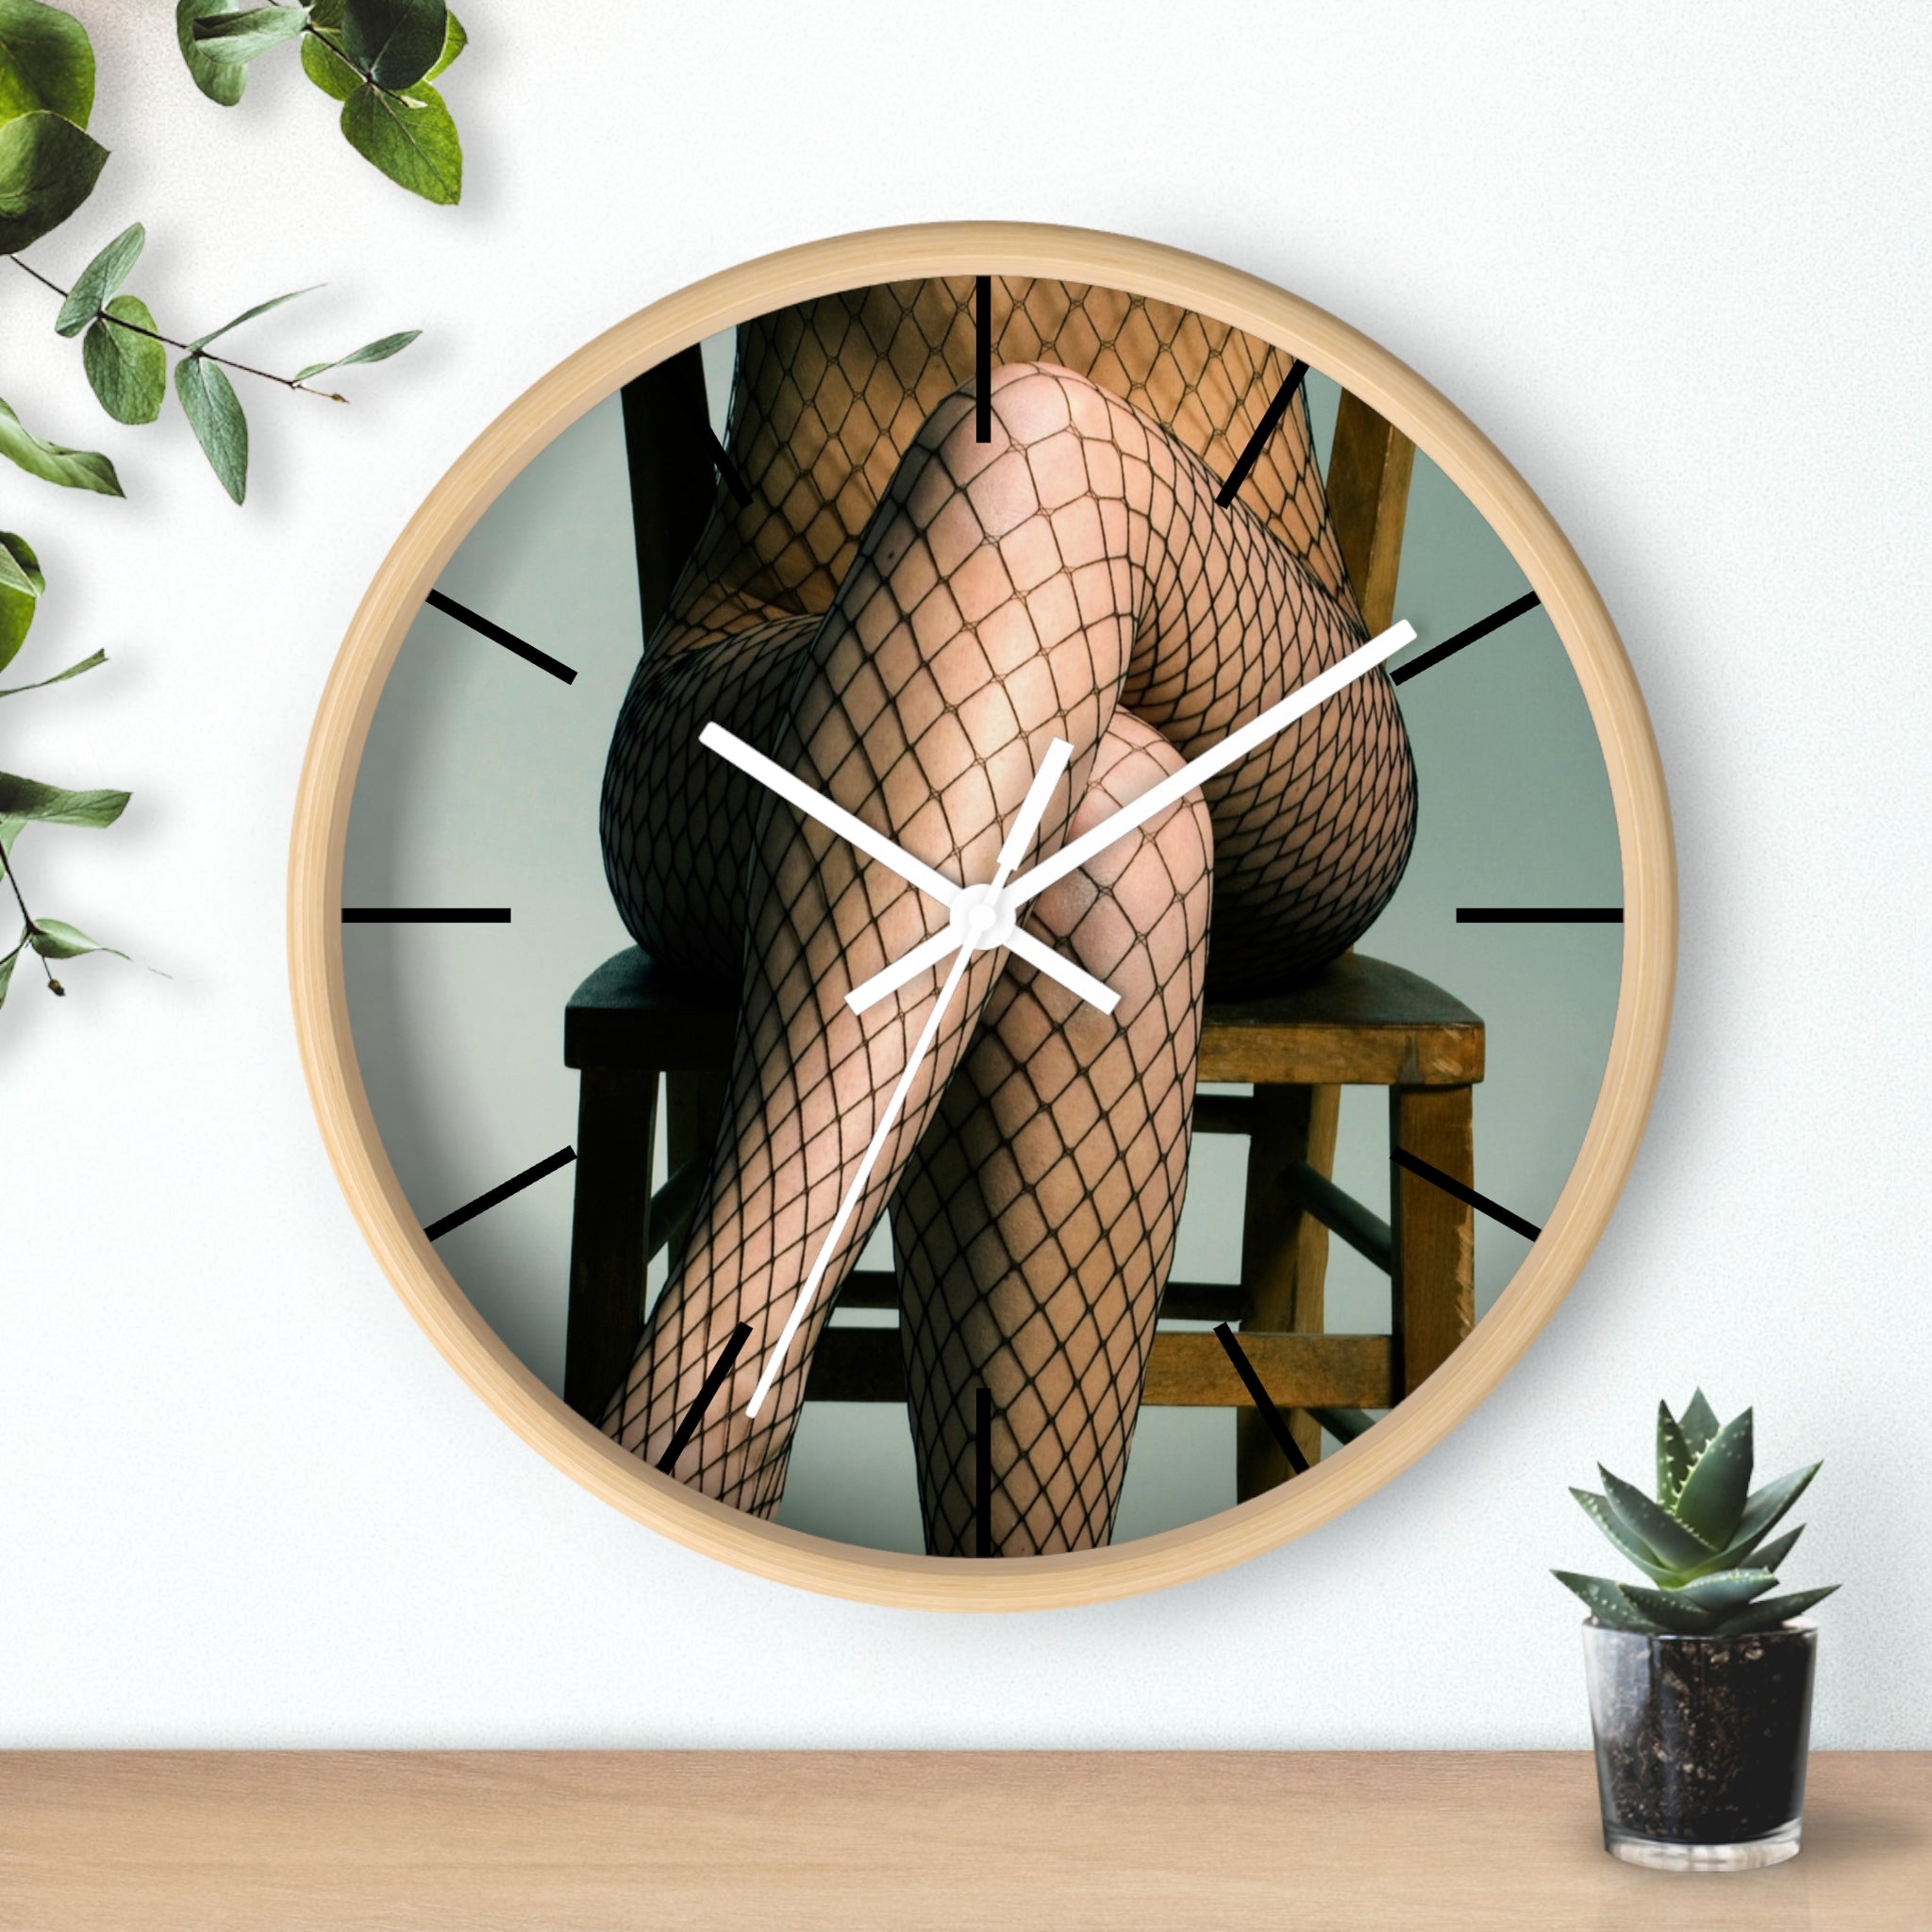 Custom Masters of Photography Legs In Fishnets Premium Wall Clock - POPvault